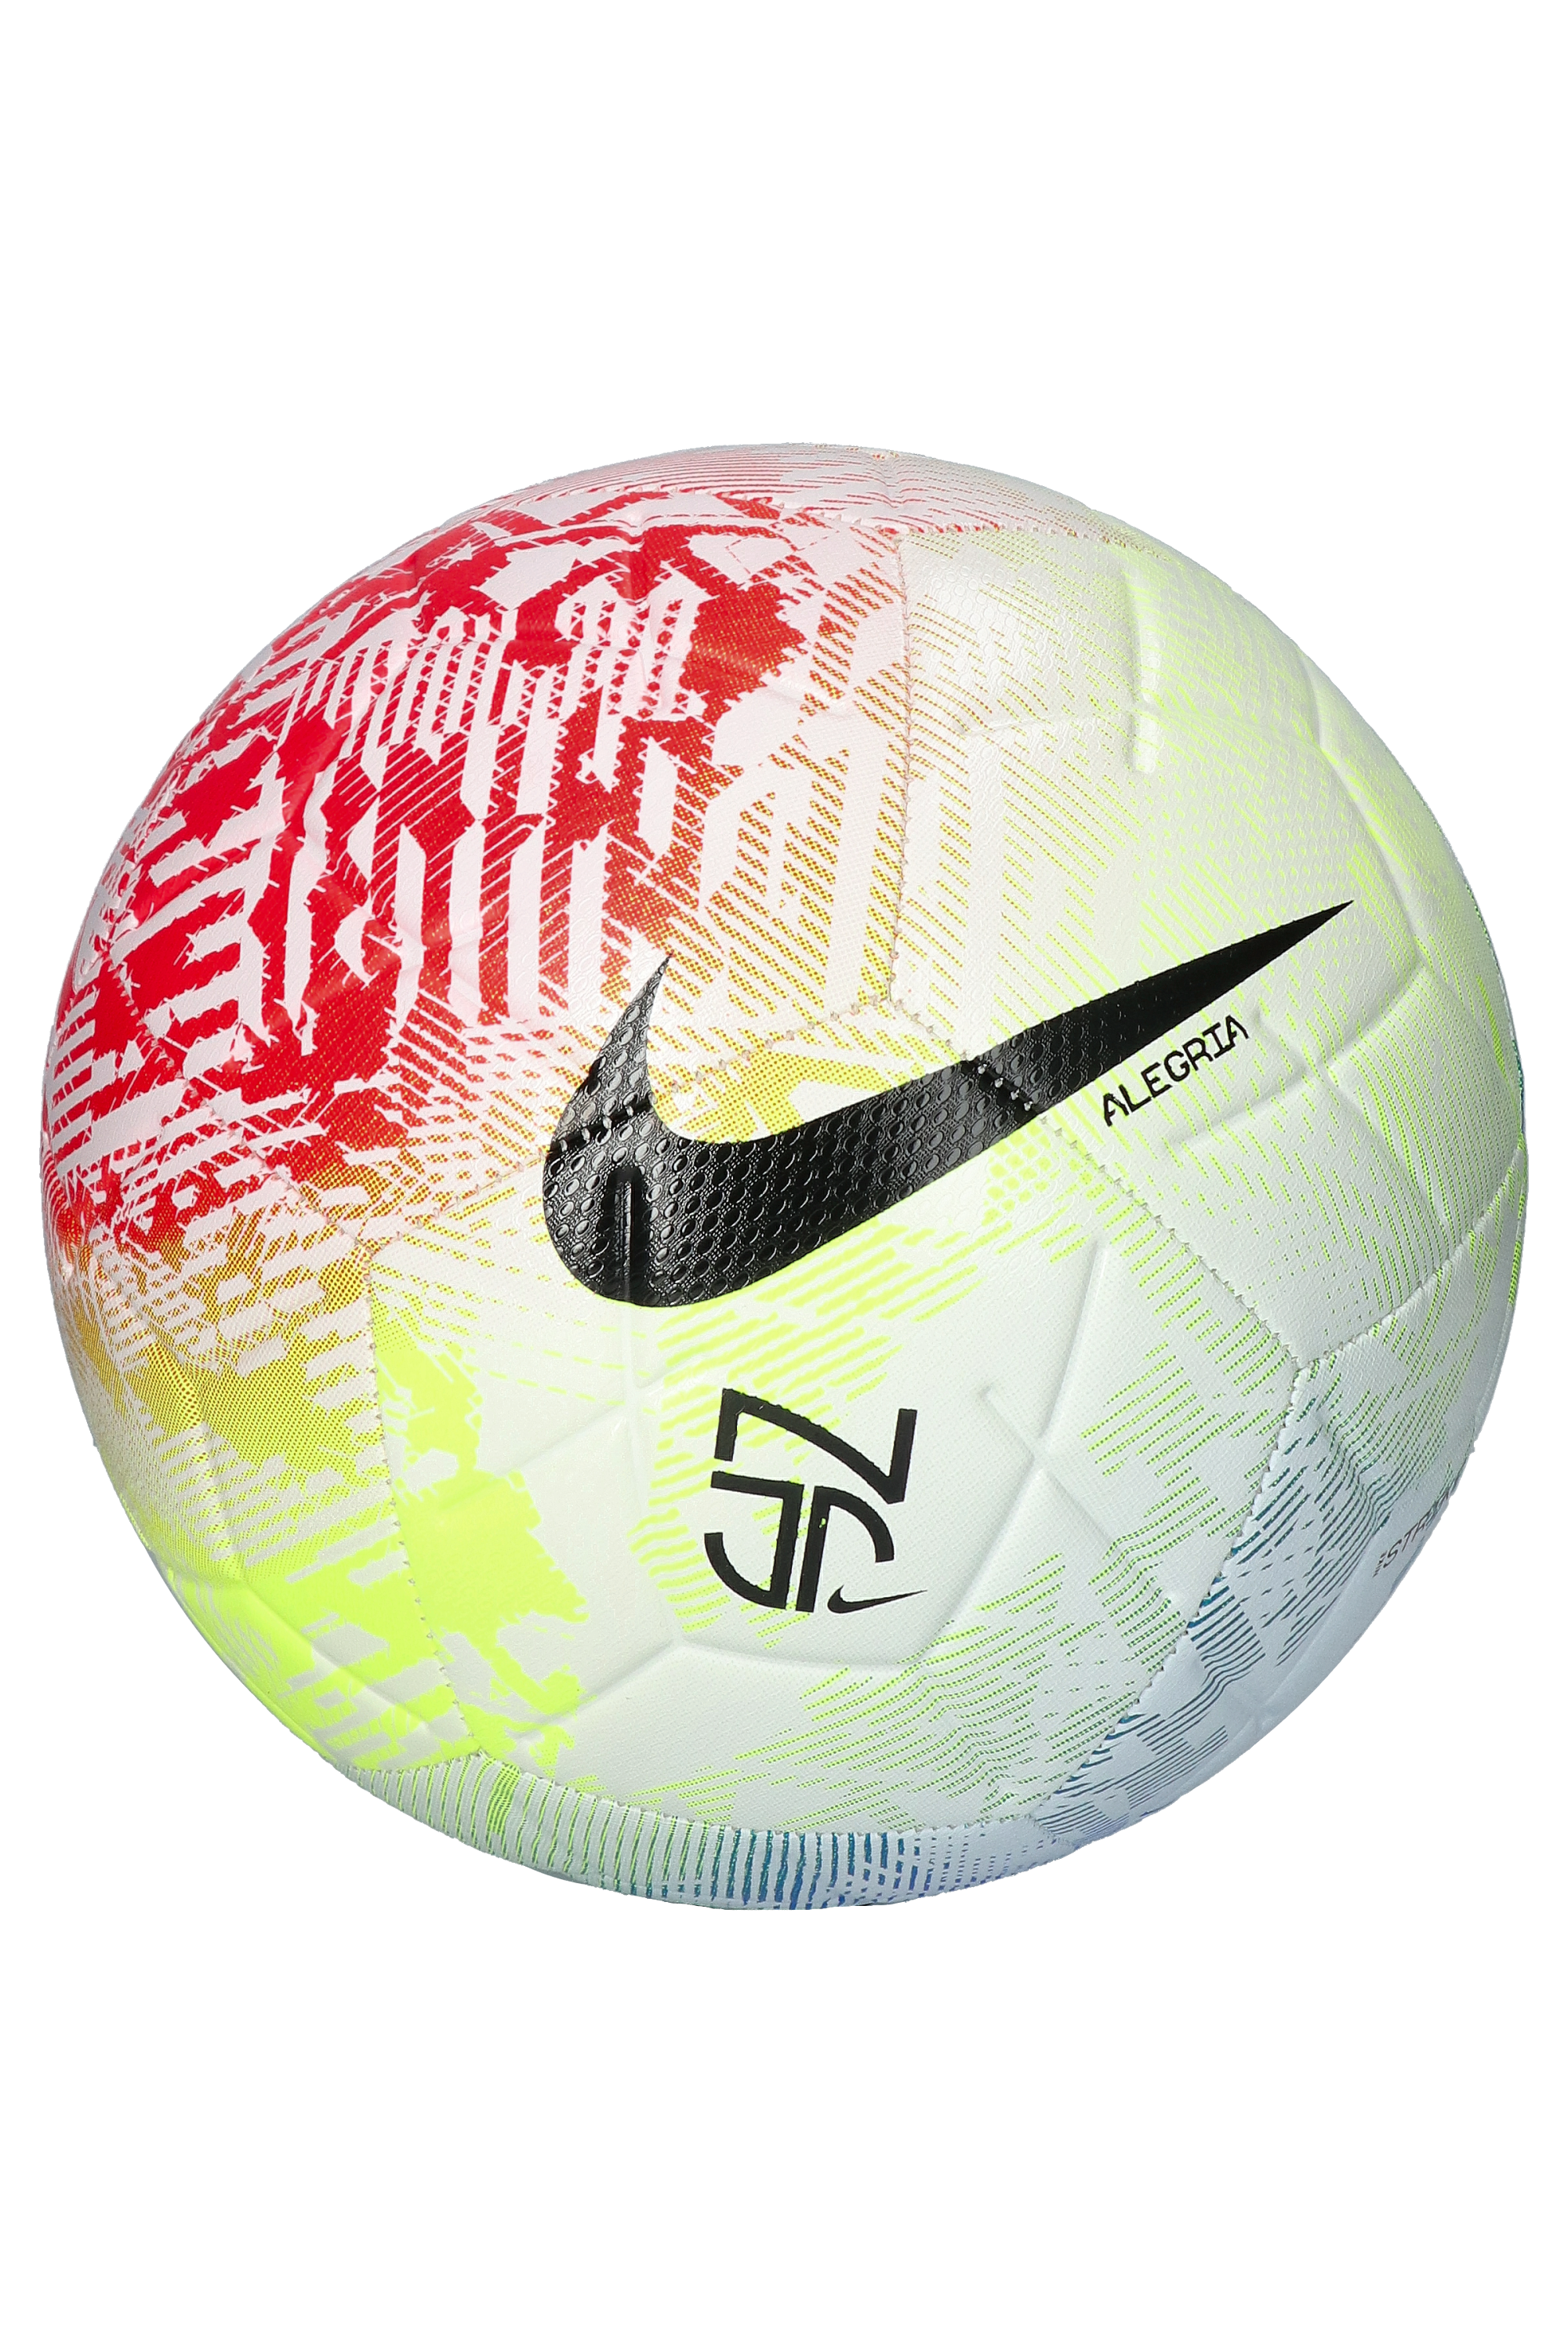 Ball Nike NJR size | R-GOL.com - & equipment